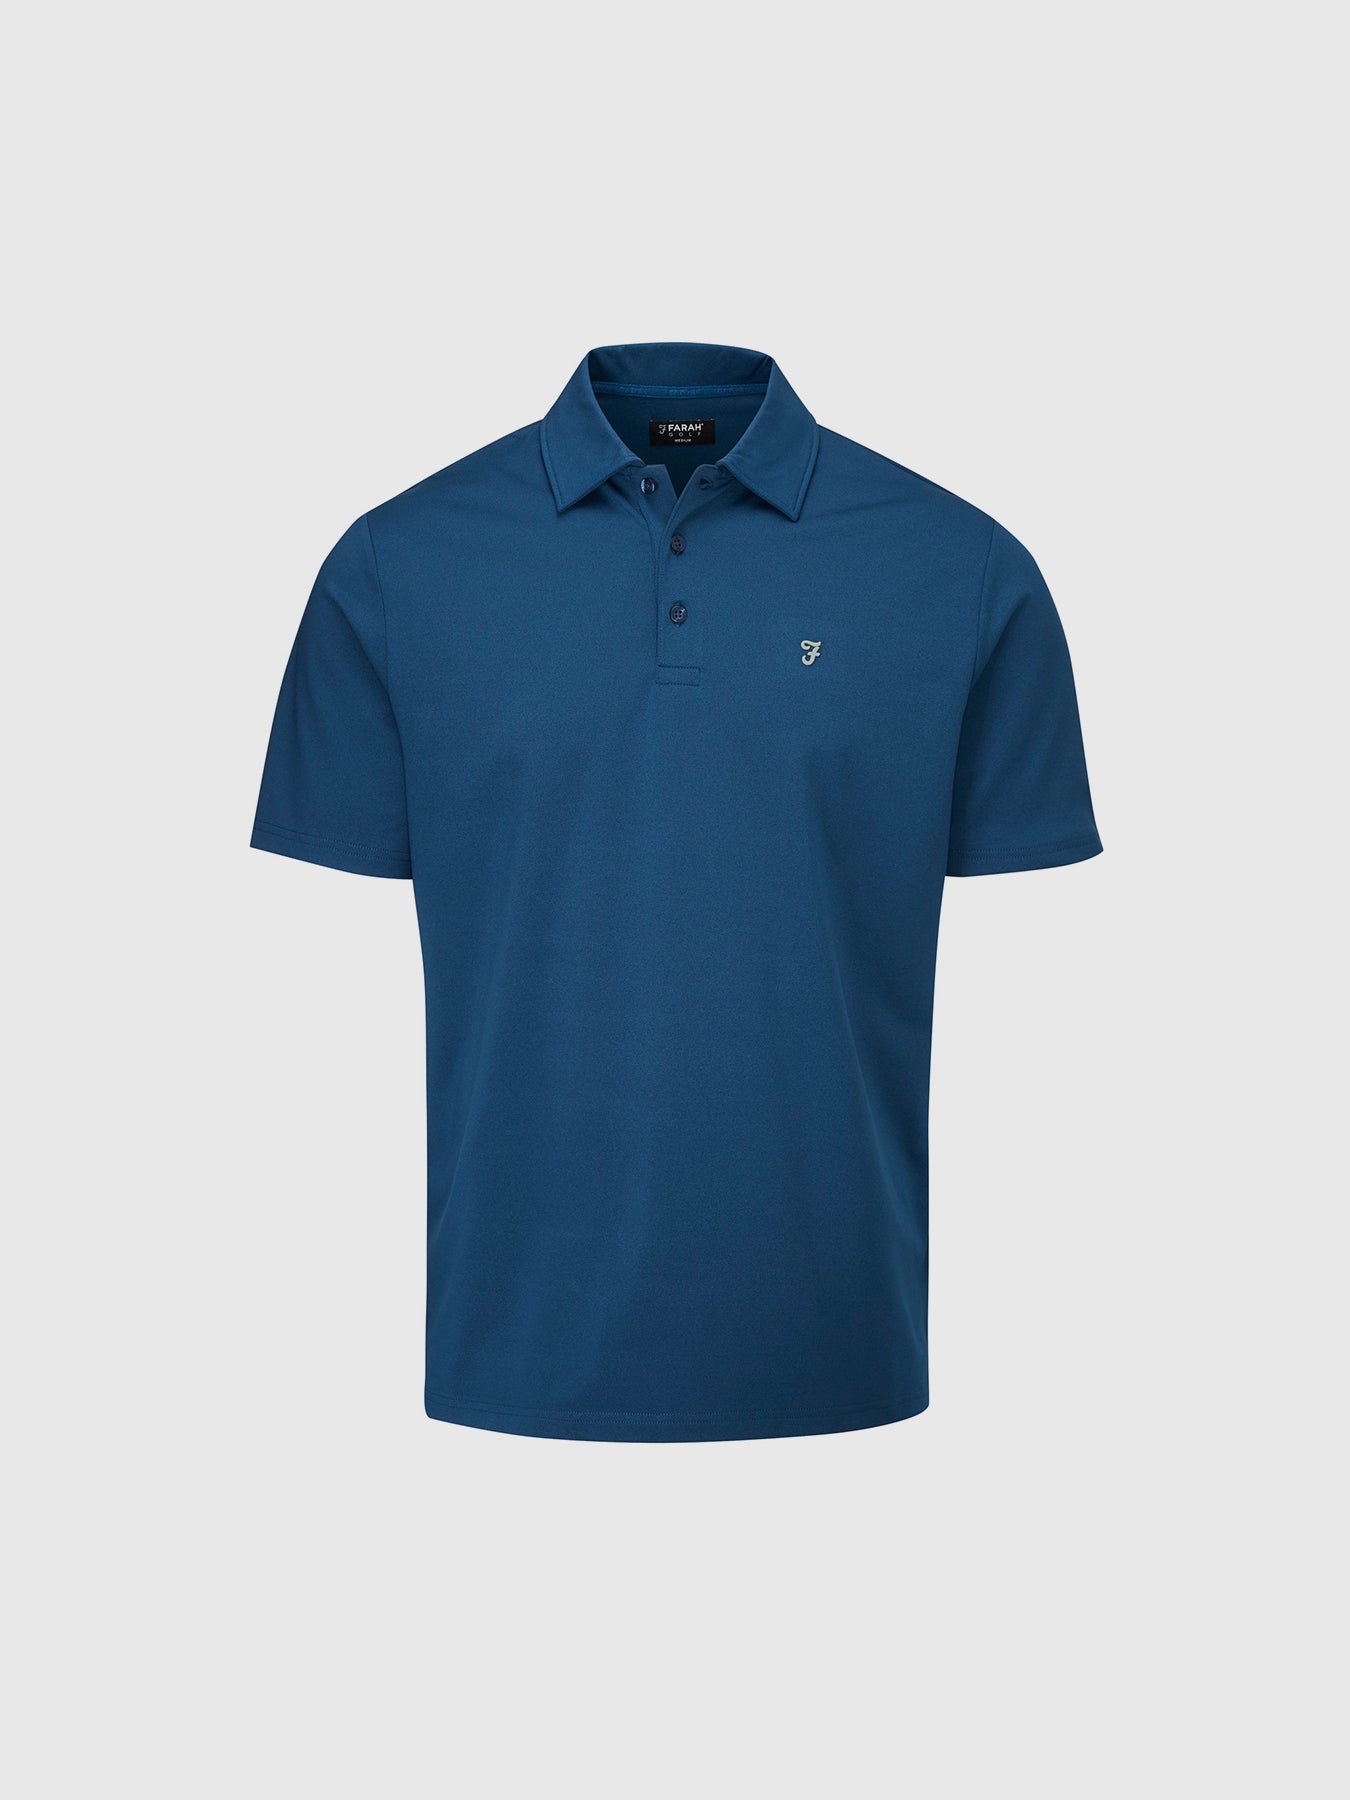 View Keller Golf Polo Shirt In Regatta Blue information